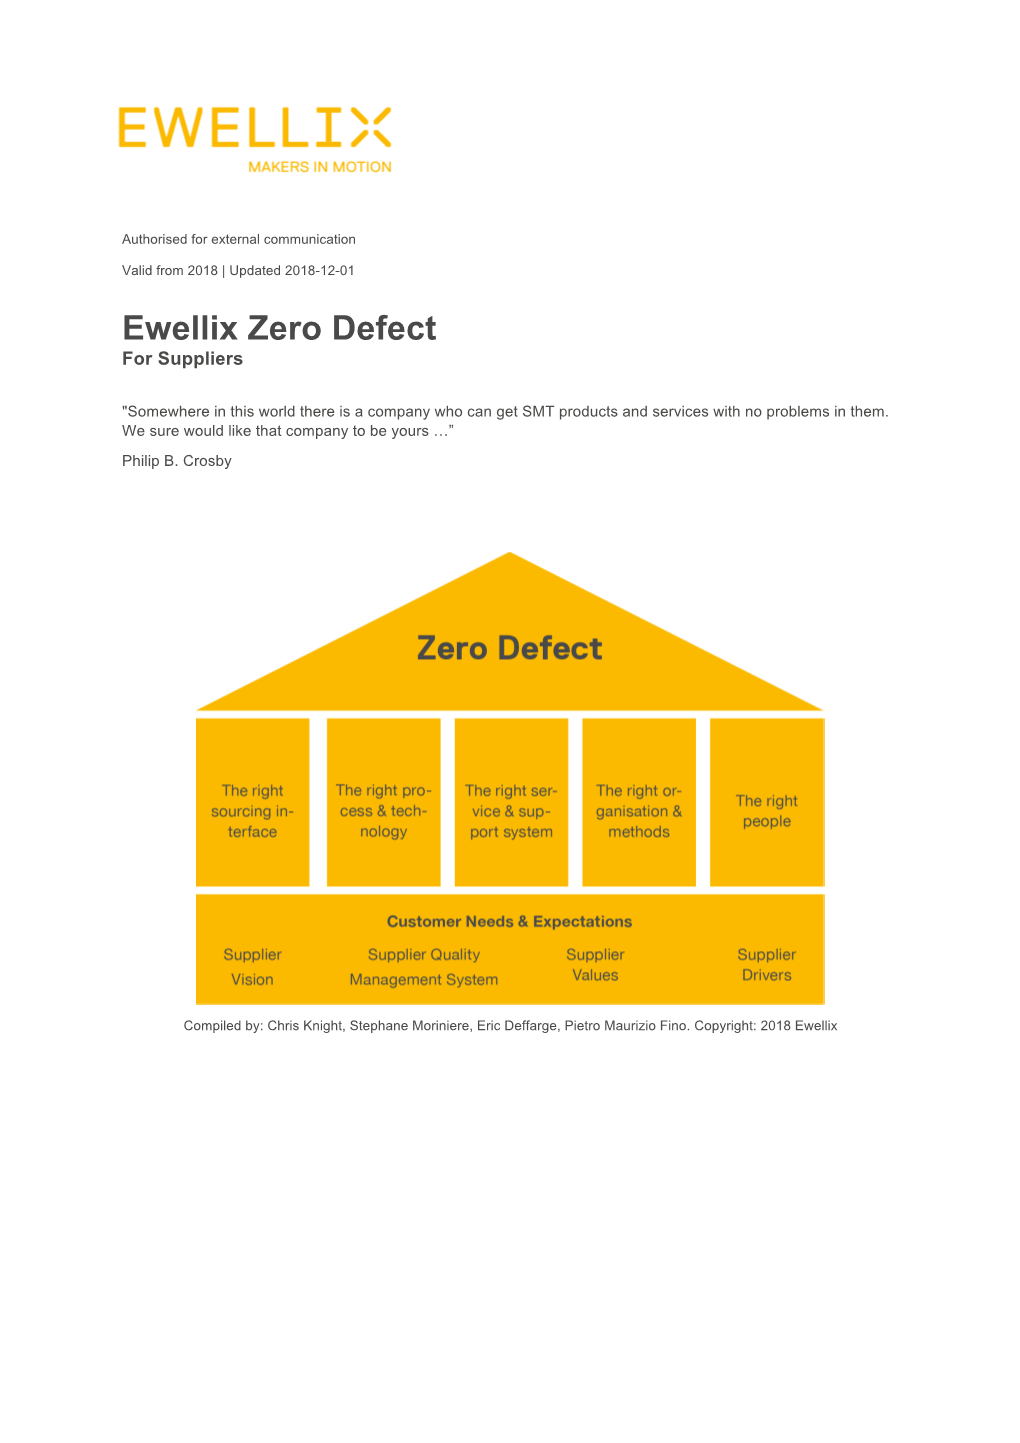 Ewellix Zero Defect for Suppliers